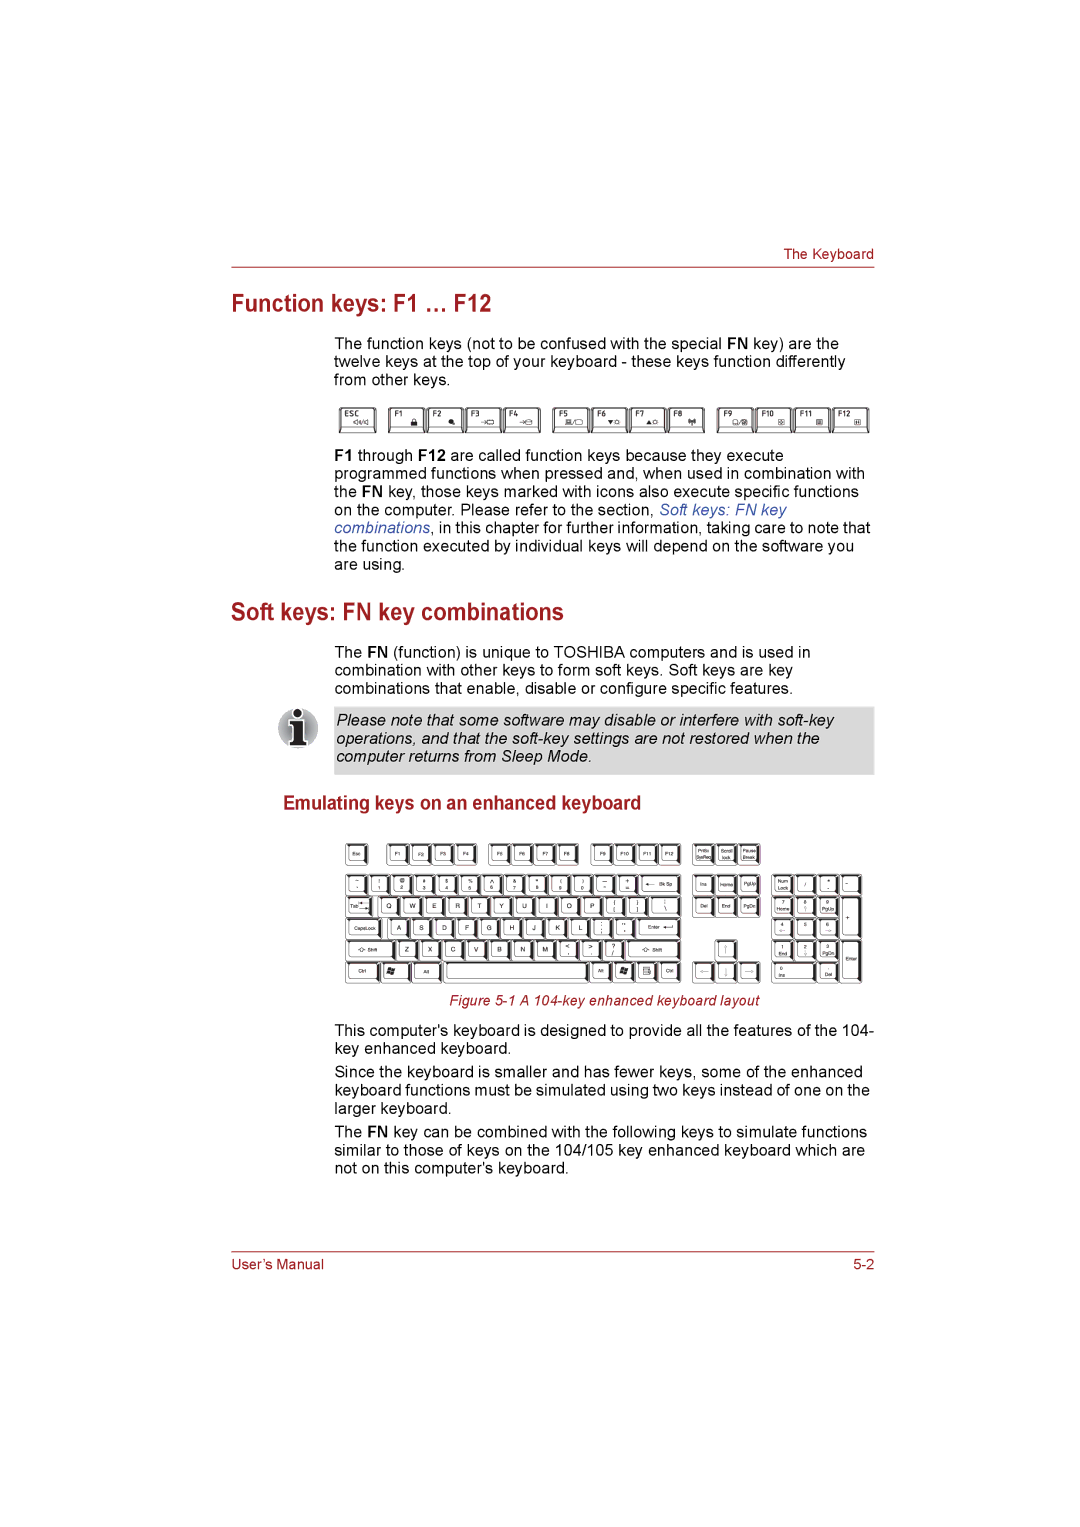 Toshiba NB255N245 user manual Function keys F1 … F12, Soft keys FN key combinations, Emulating keys on an enhanced keyboard 